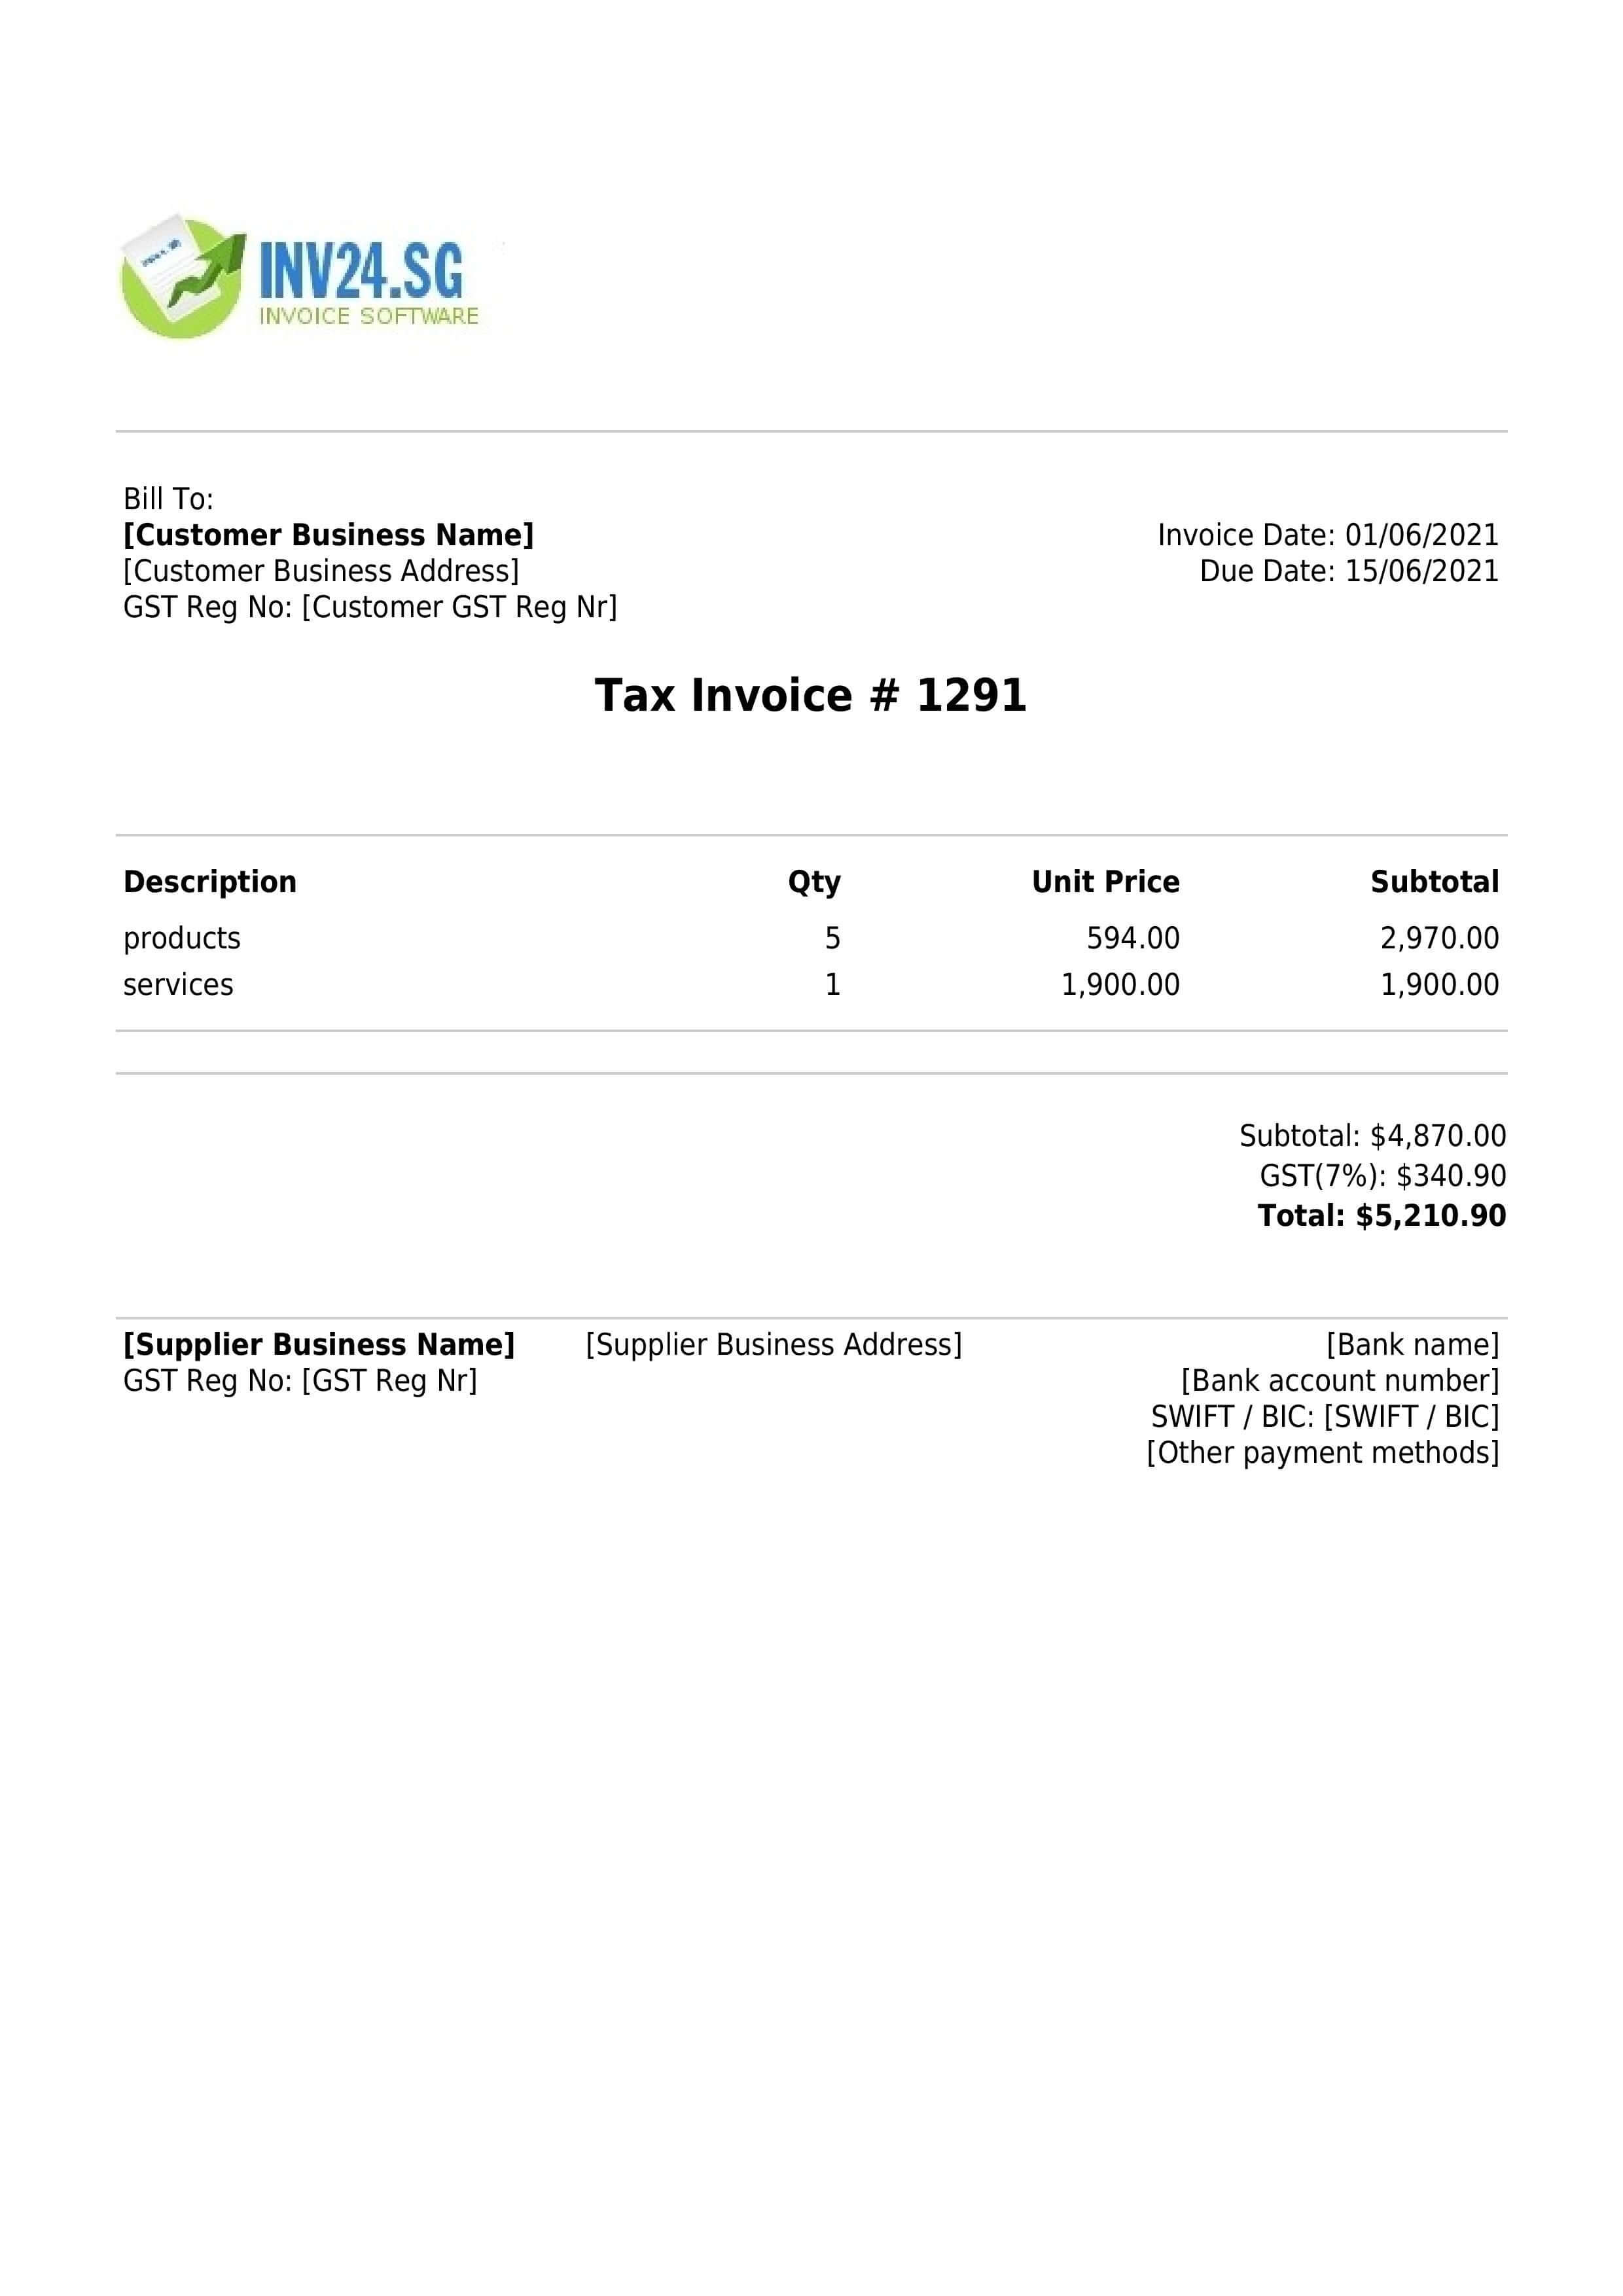 PDF invoice example Singapore